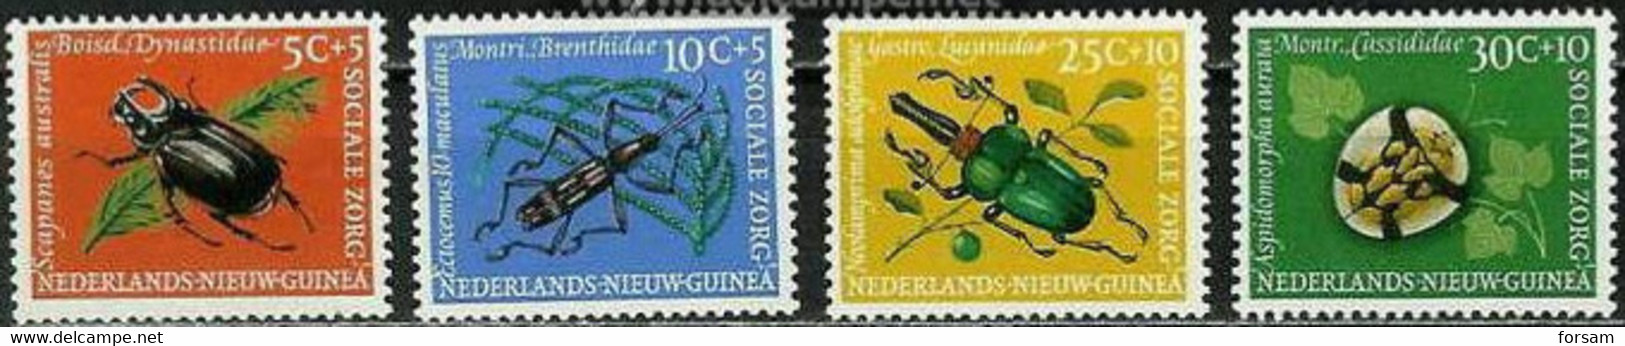 NETHERLANDS NEW GUINEA..1961..Michel # 69-72...MLH. - Netherlands New Guinea